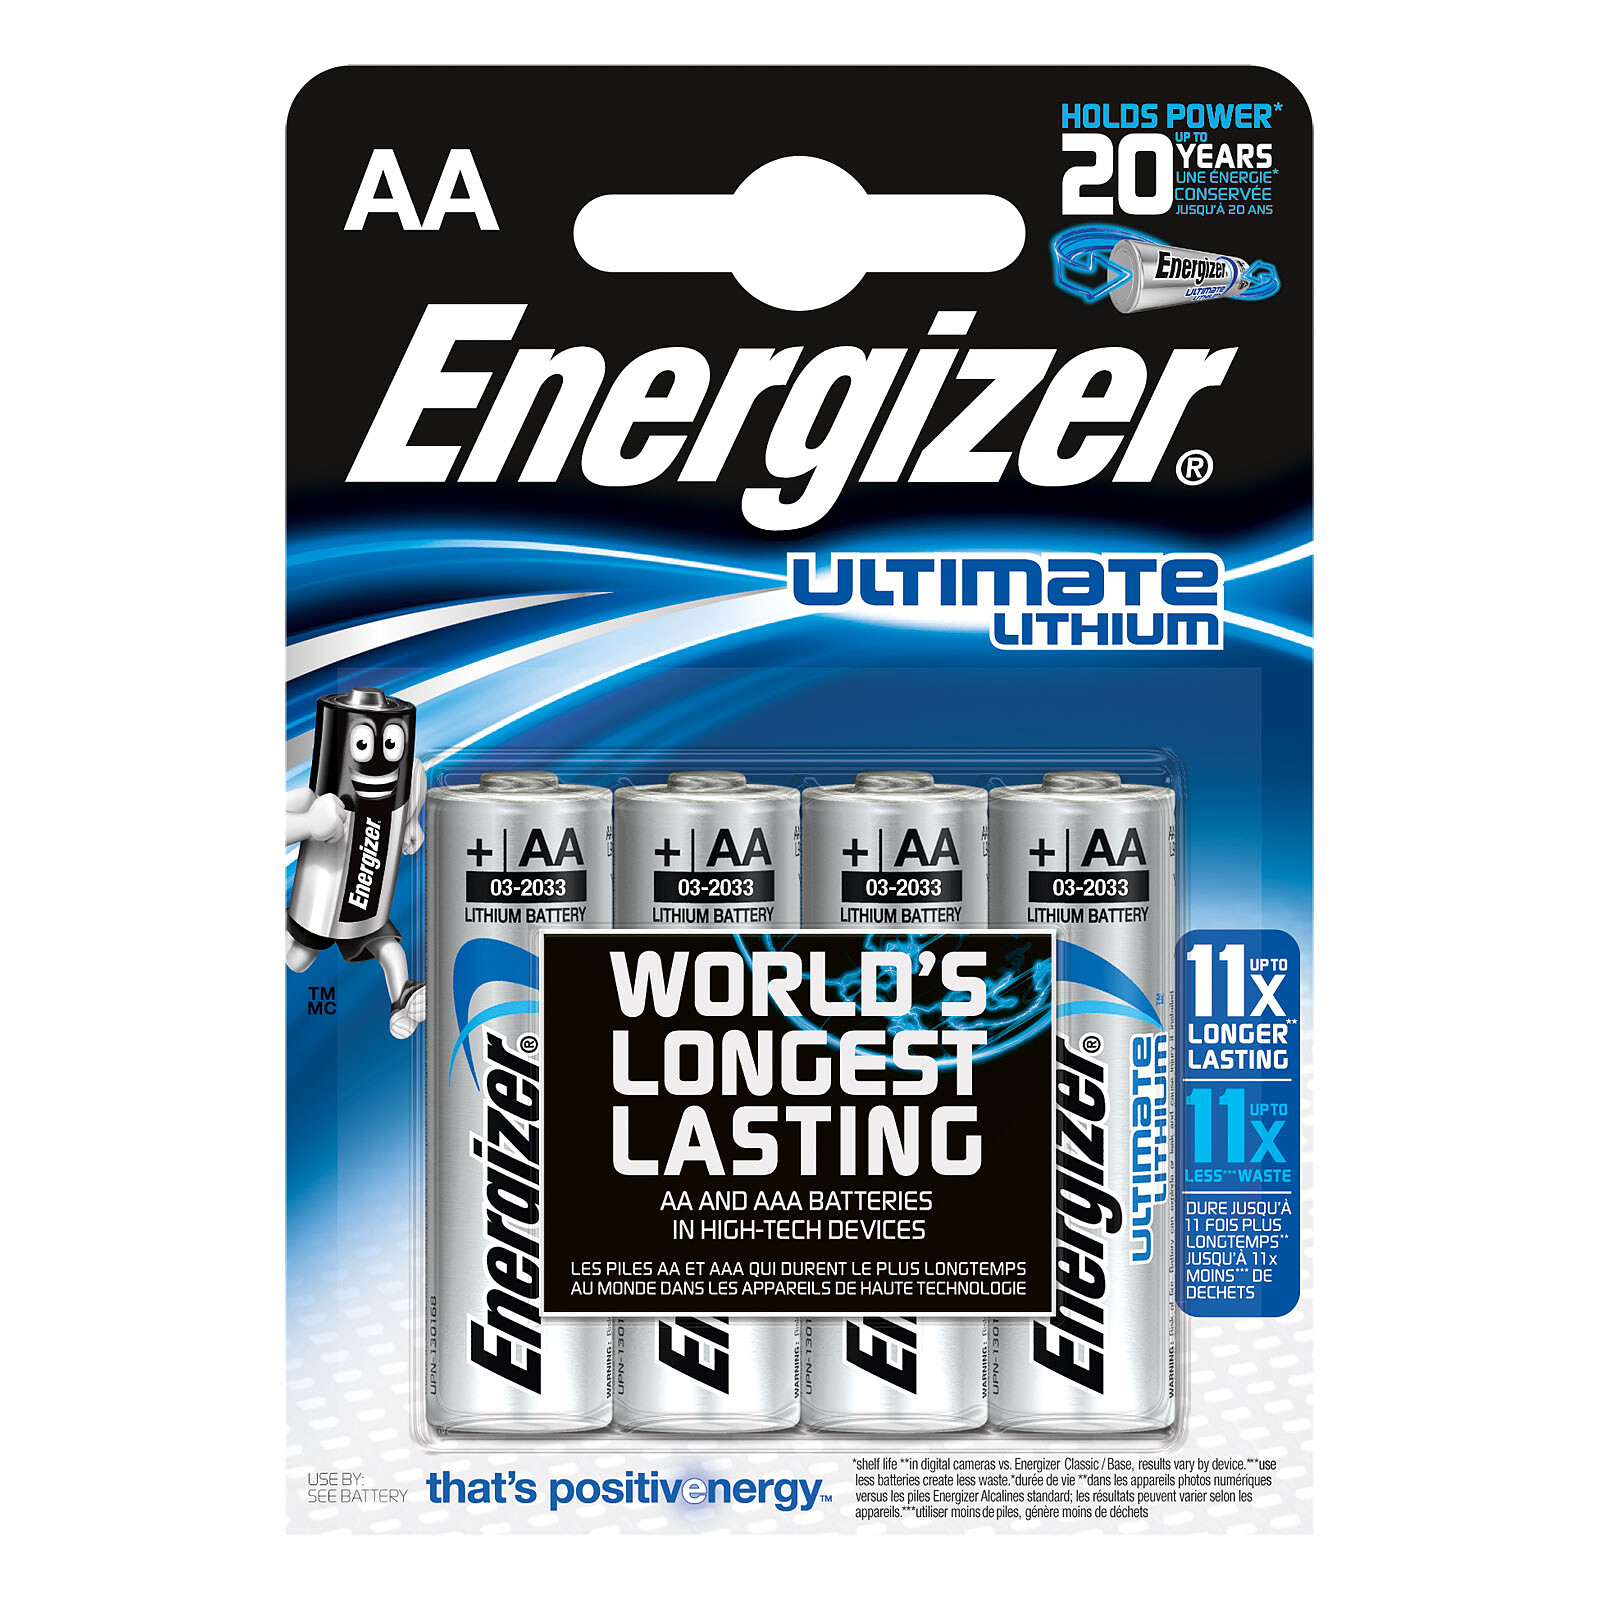 Energizer Ultimate Lithium AA Pack de 10